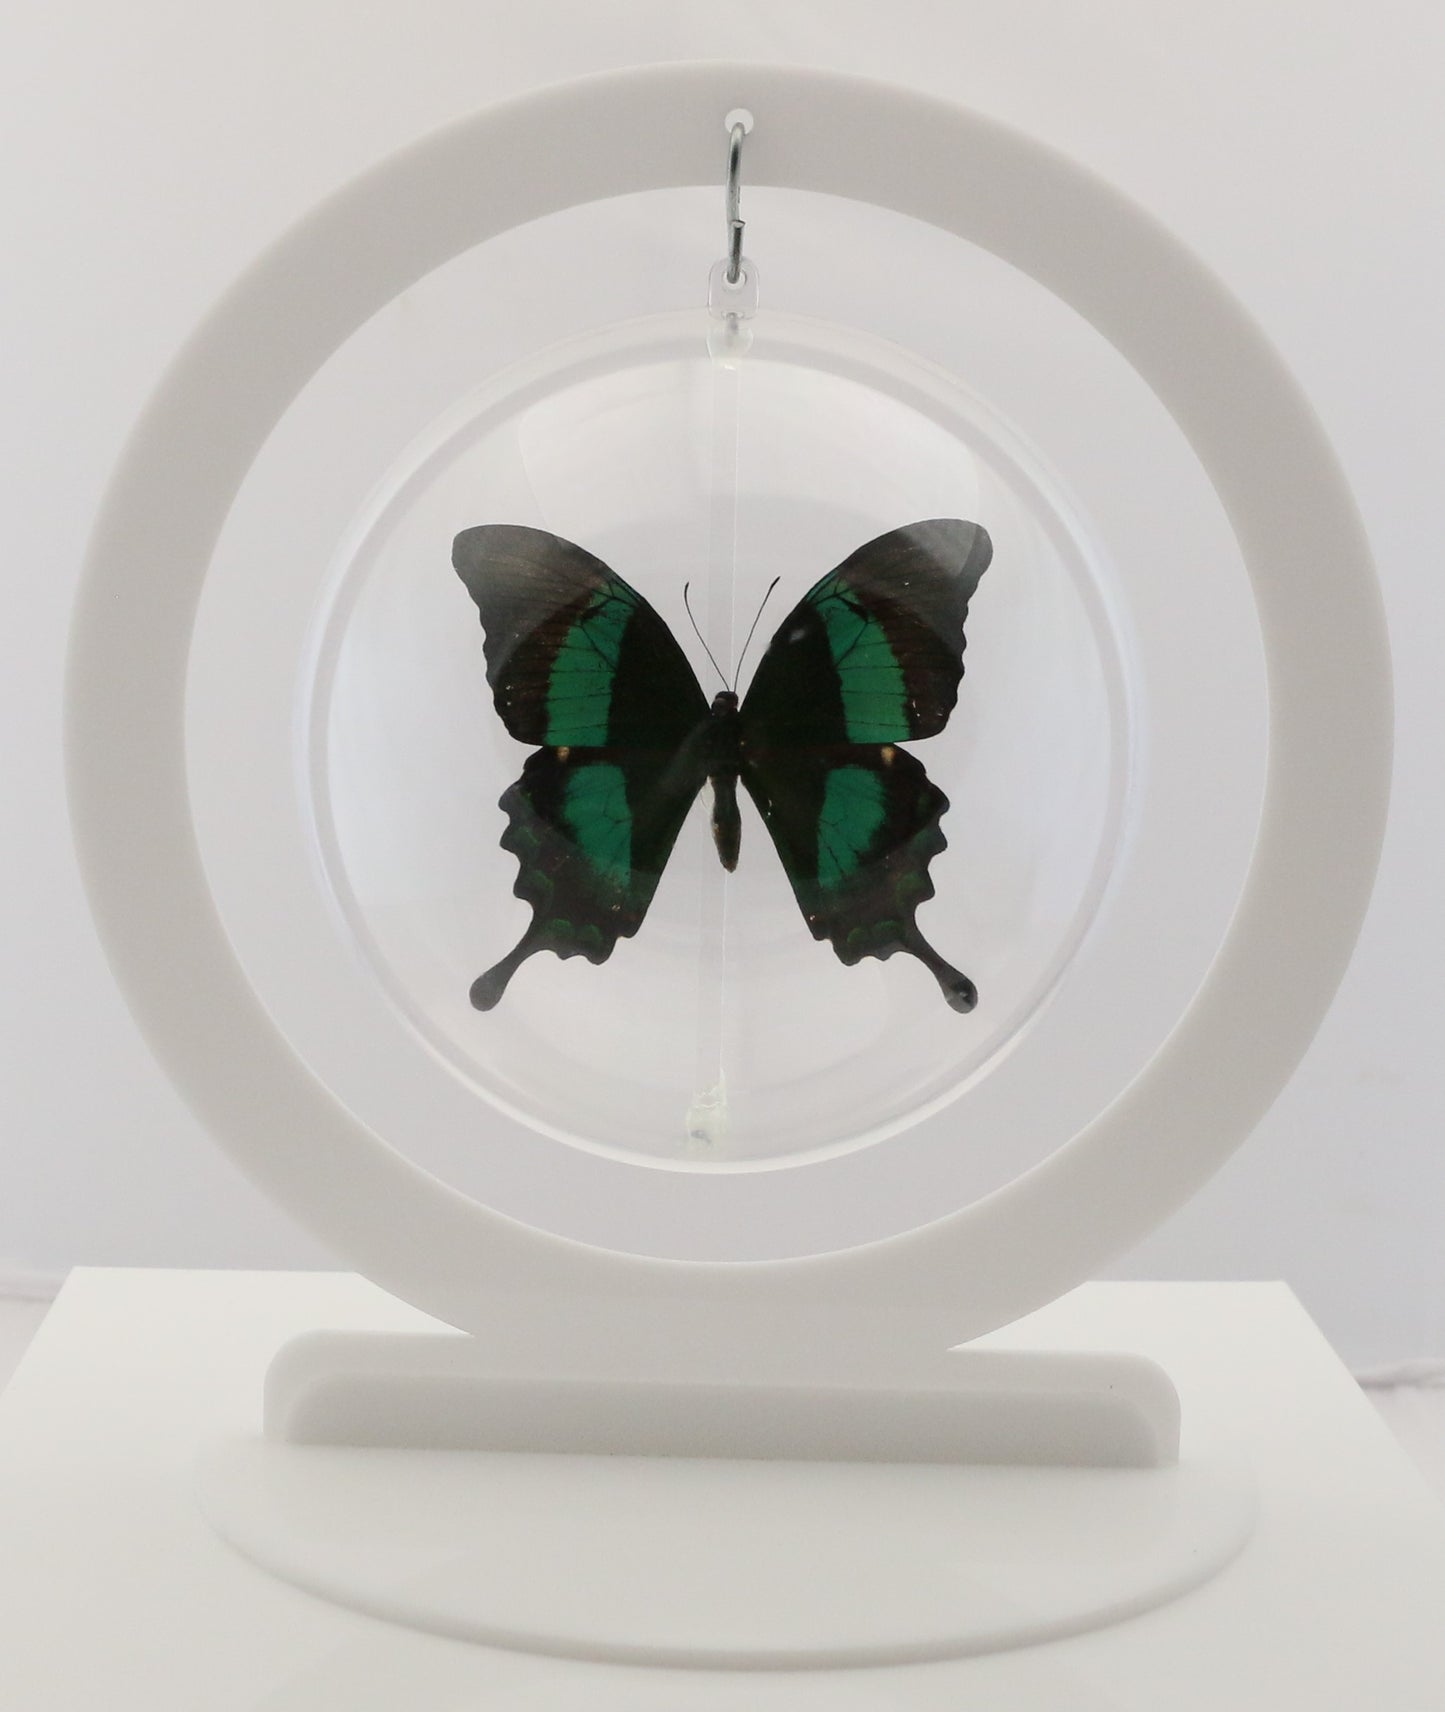 750305 - Butterfly Bubble - Lg. - Round - Emerald Swallowtail (Papilio palinurus daedalus)